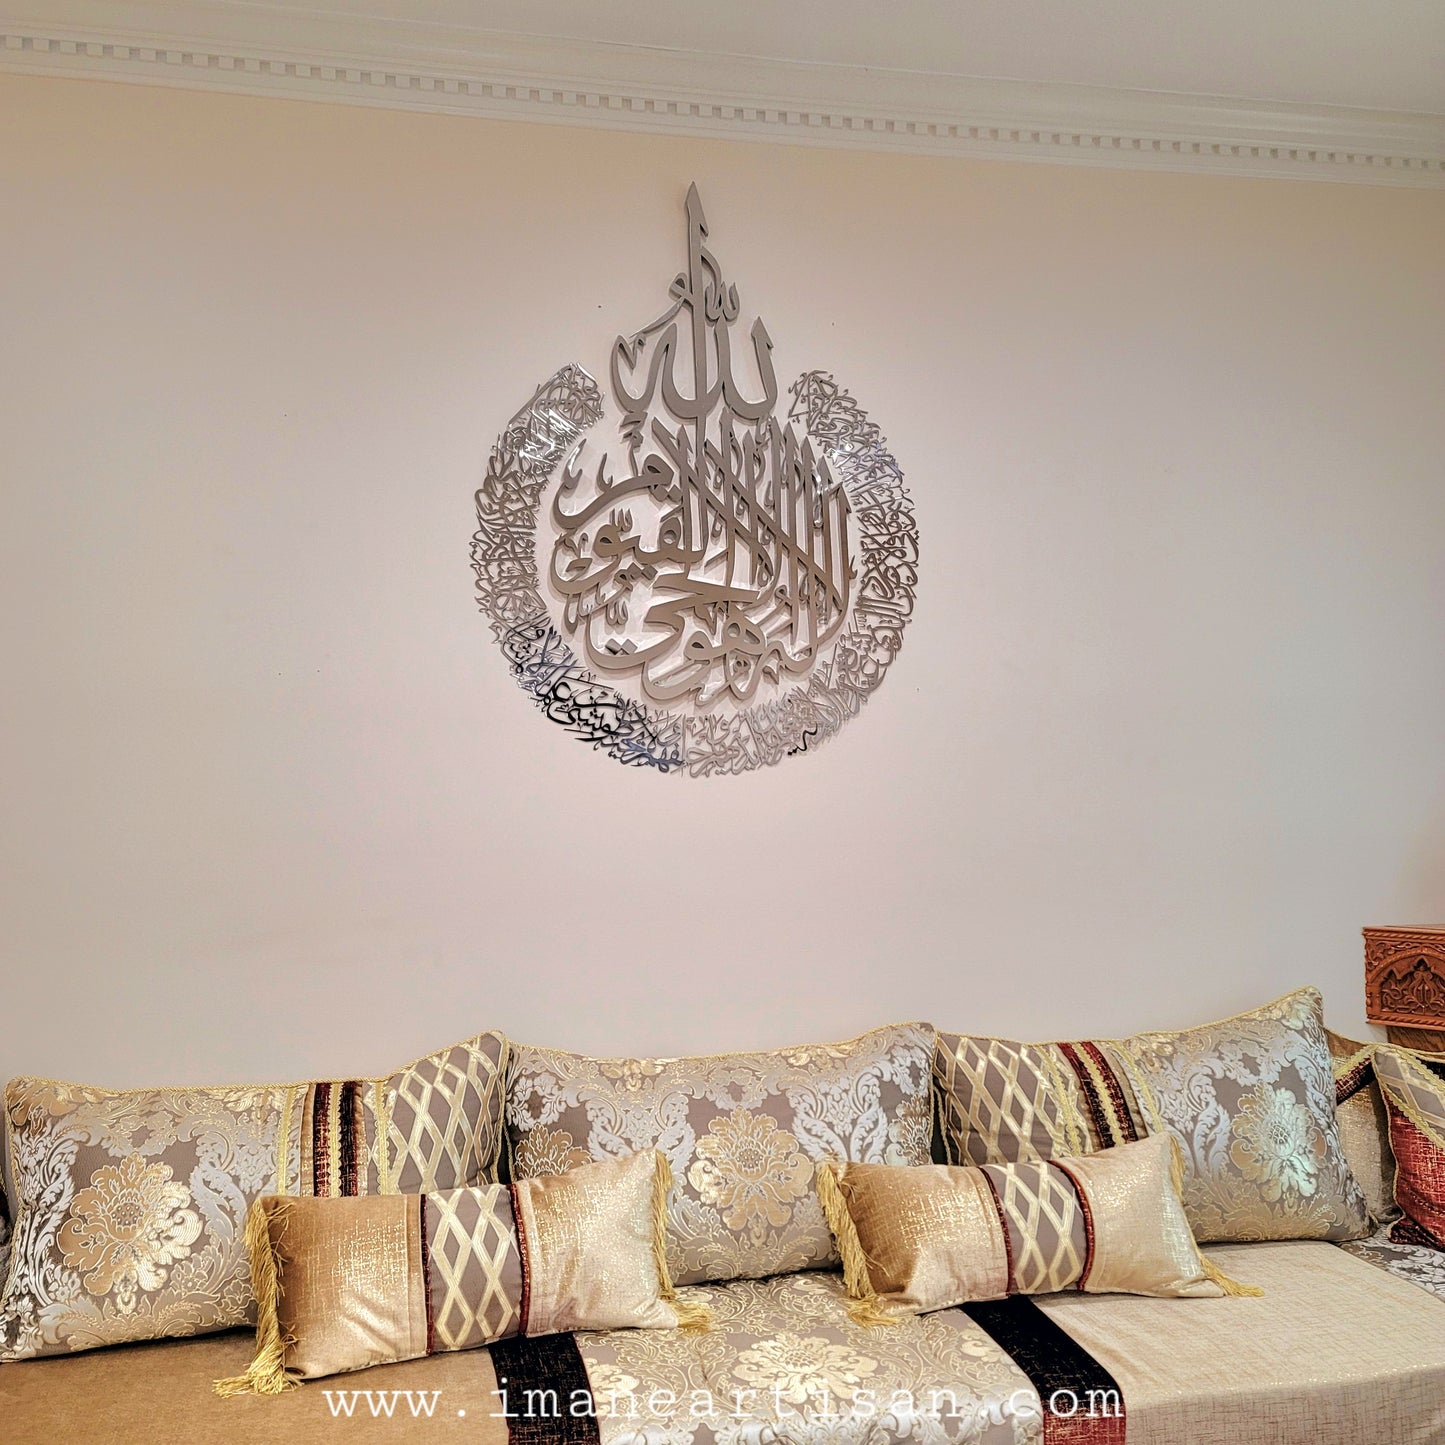 Ayatul Kursi Calligraphy wall Art Stainless Steel